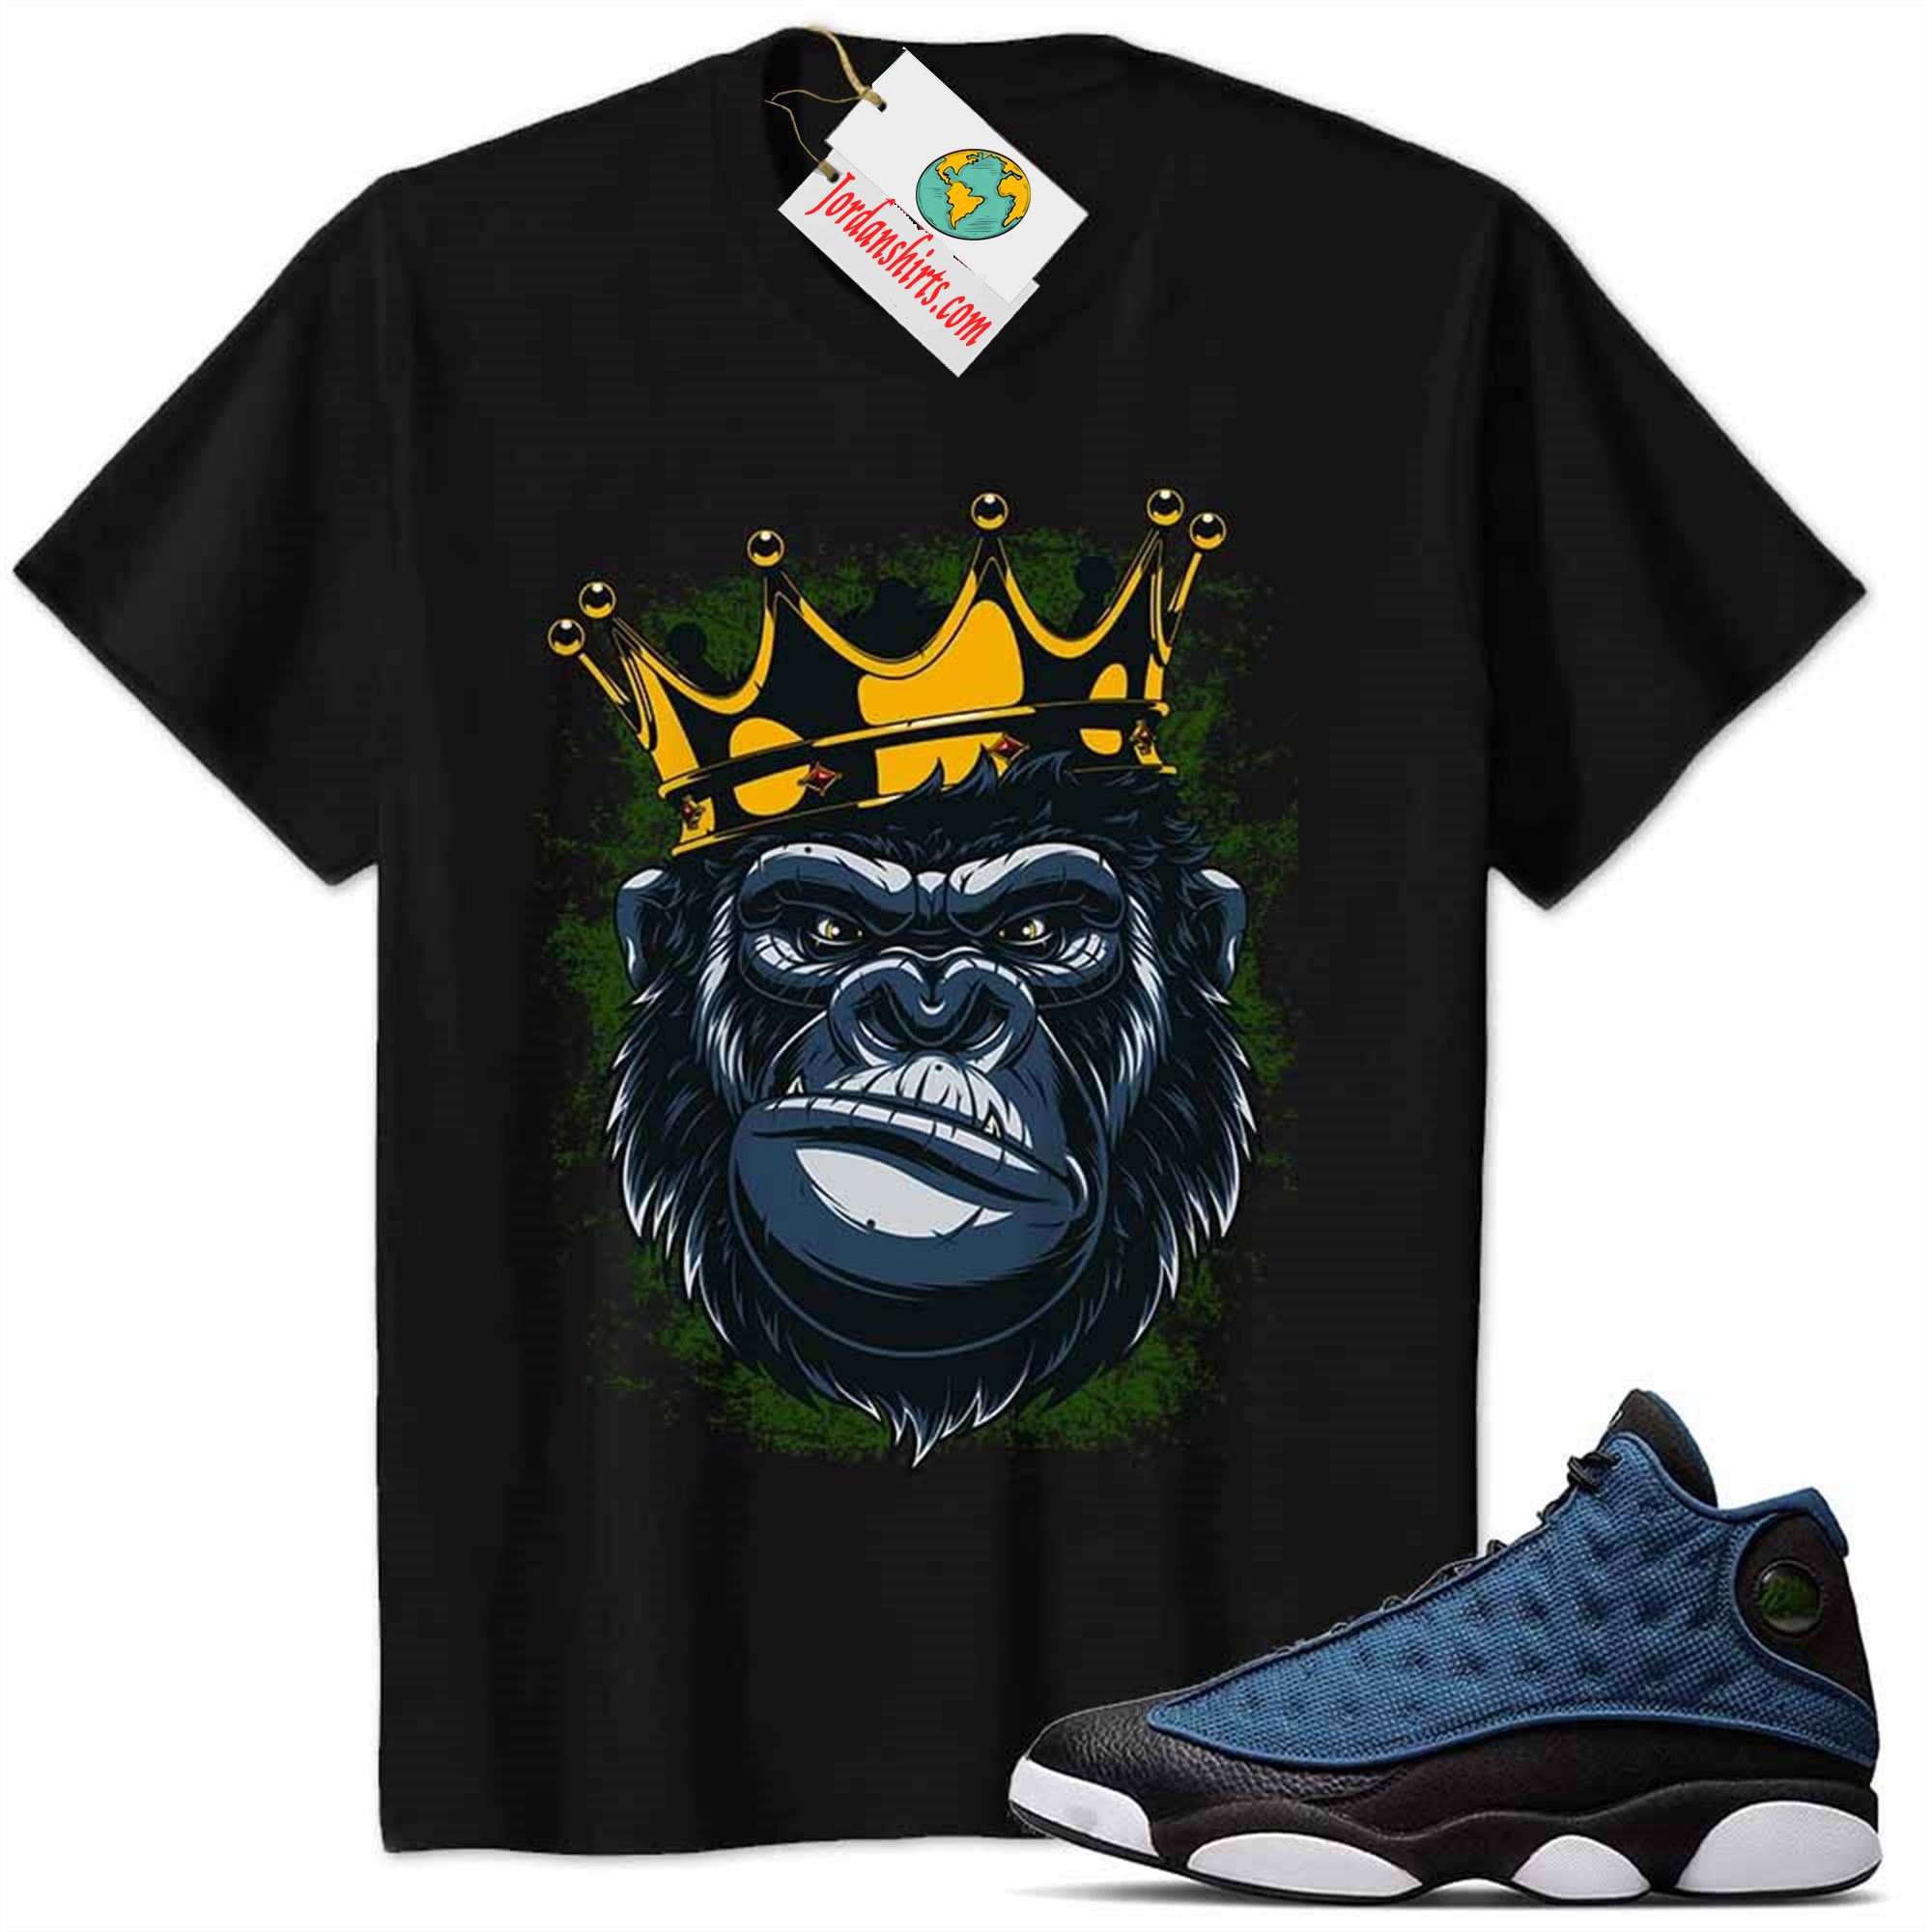 Jordan 13 Shirt, Jordan 13 Brave Blue Shirt The Gorilla King With Crown Black Plus Size Up To 5xl